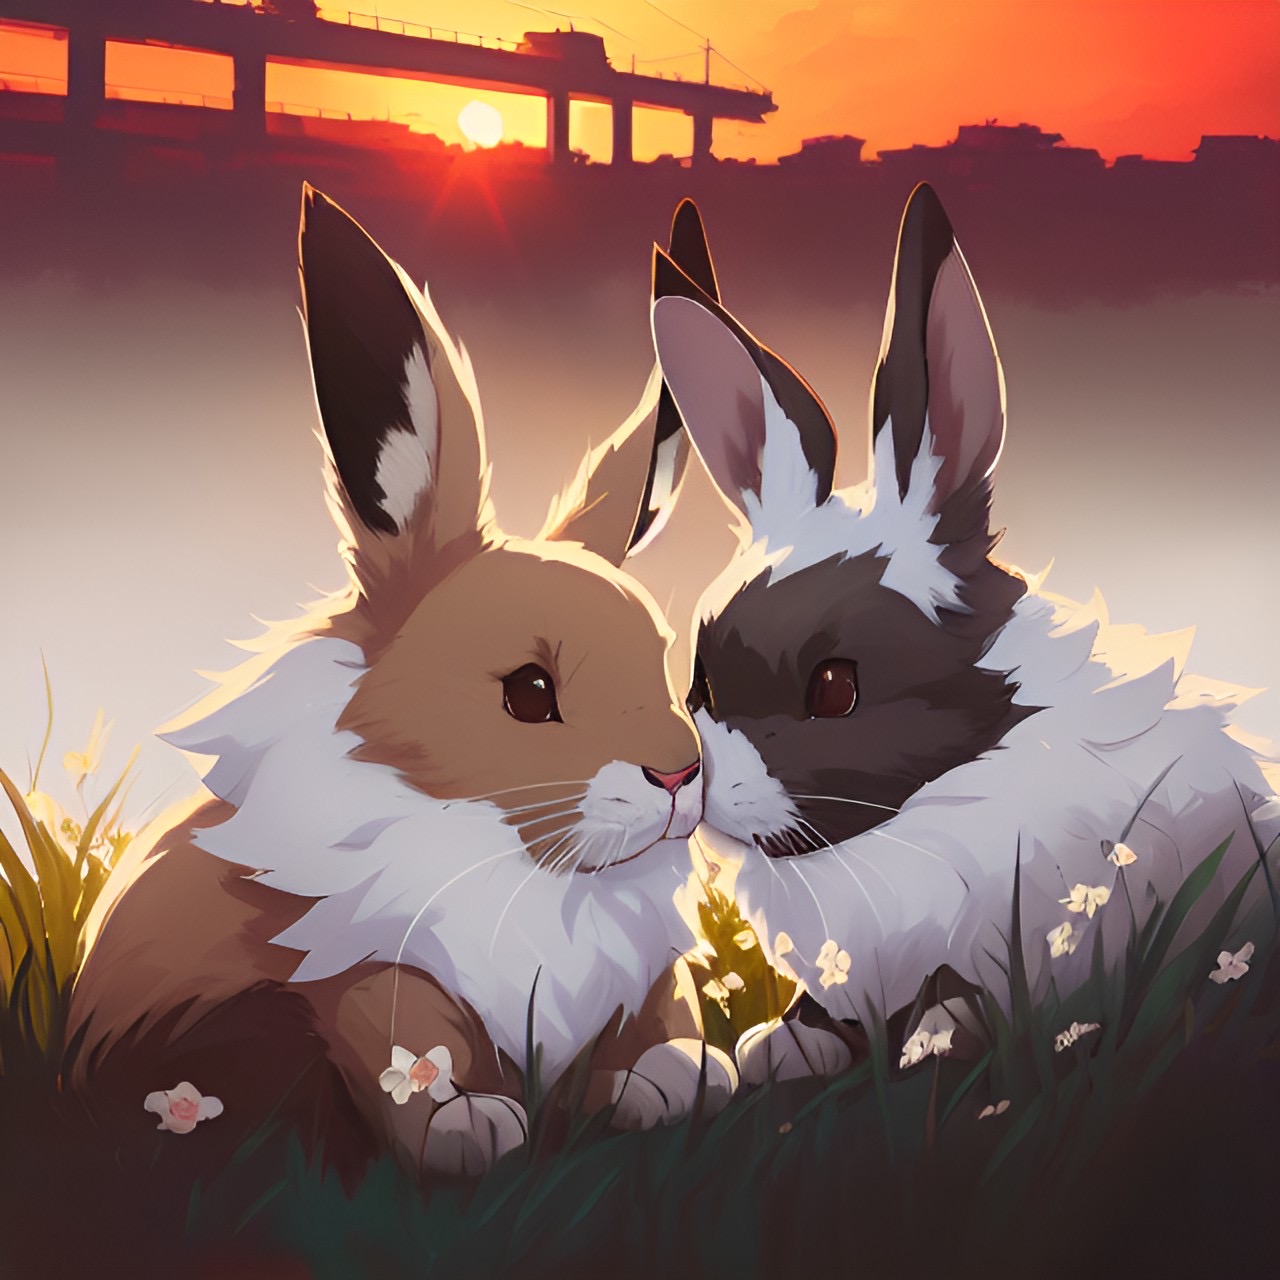 Two rabbits cuddling